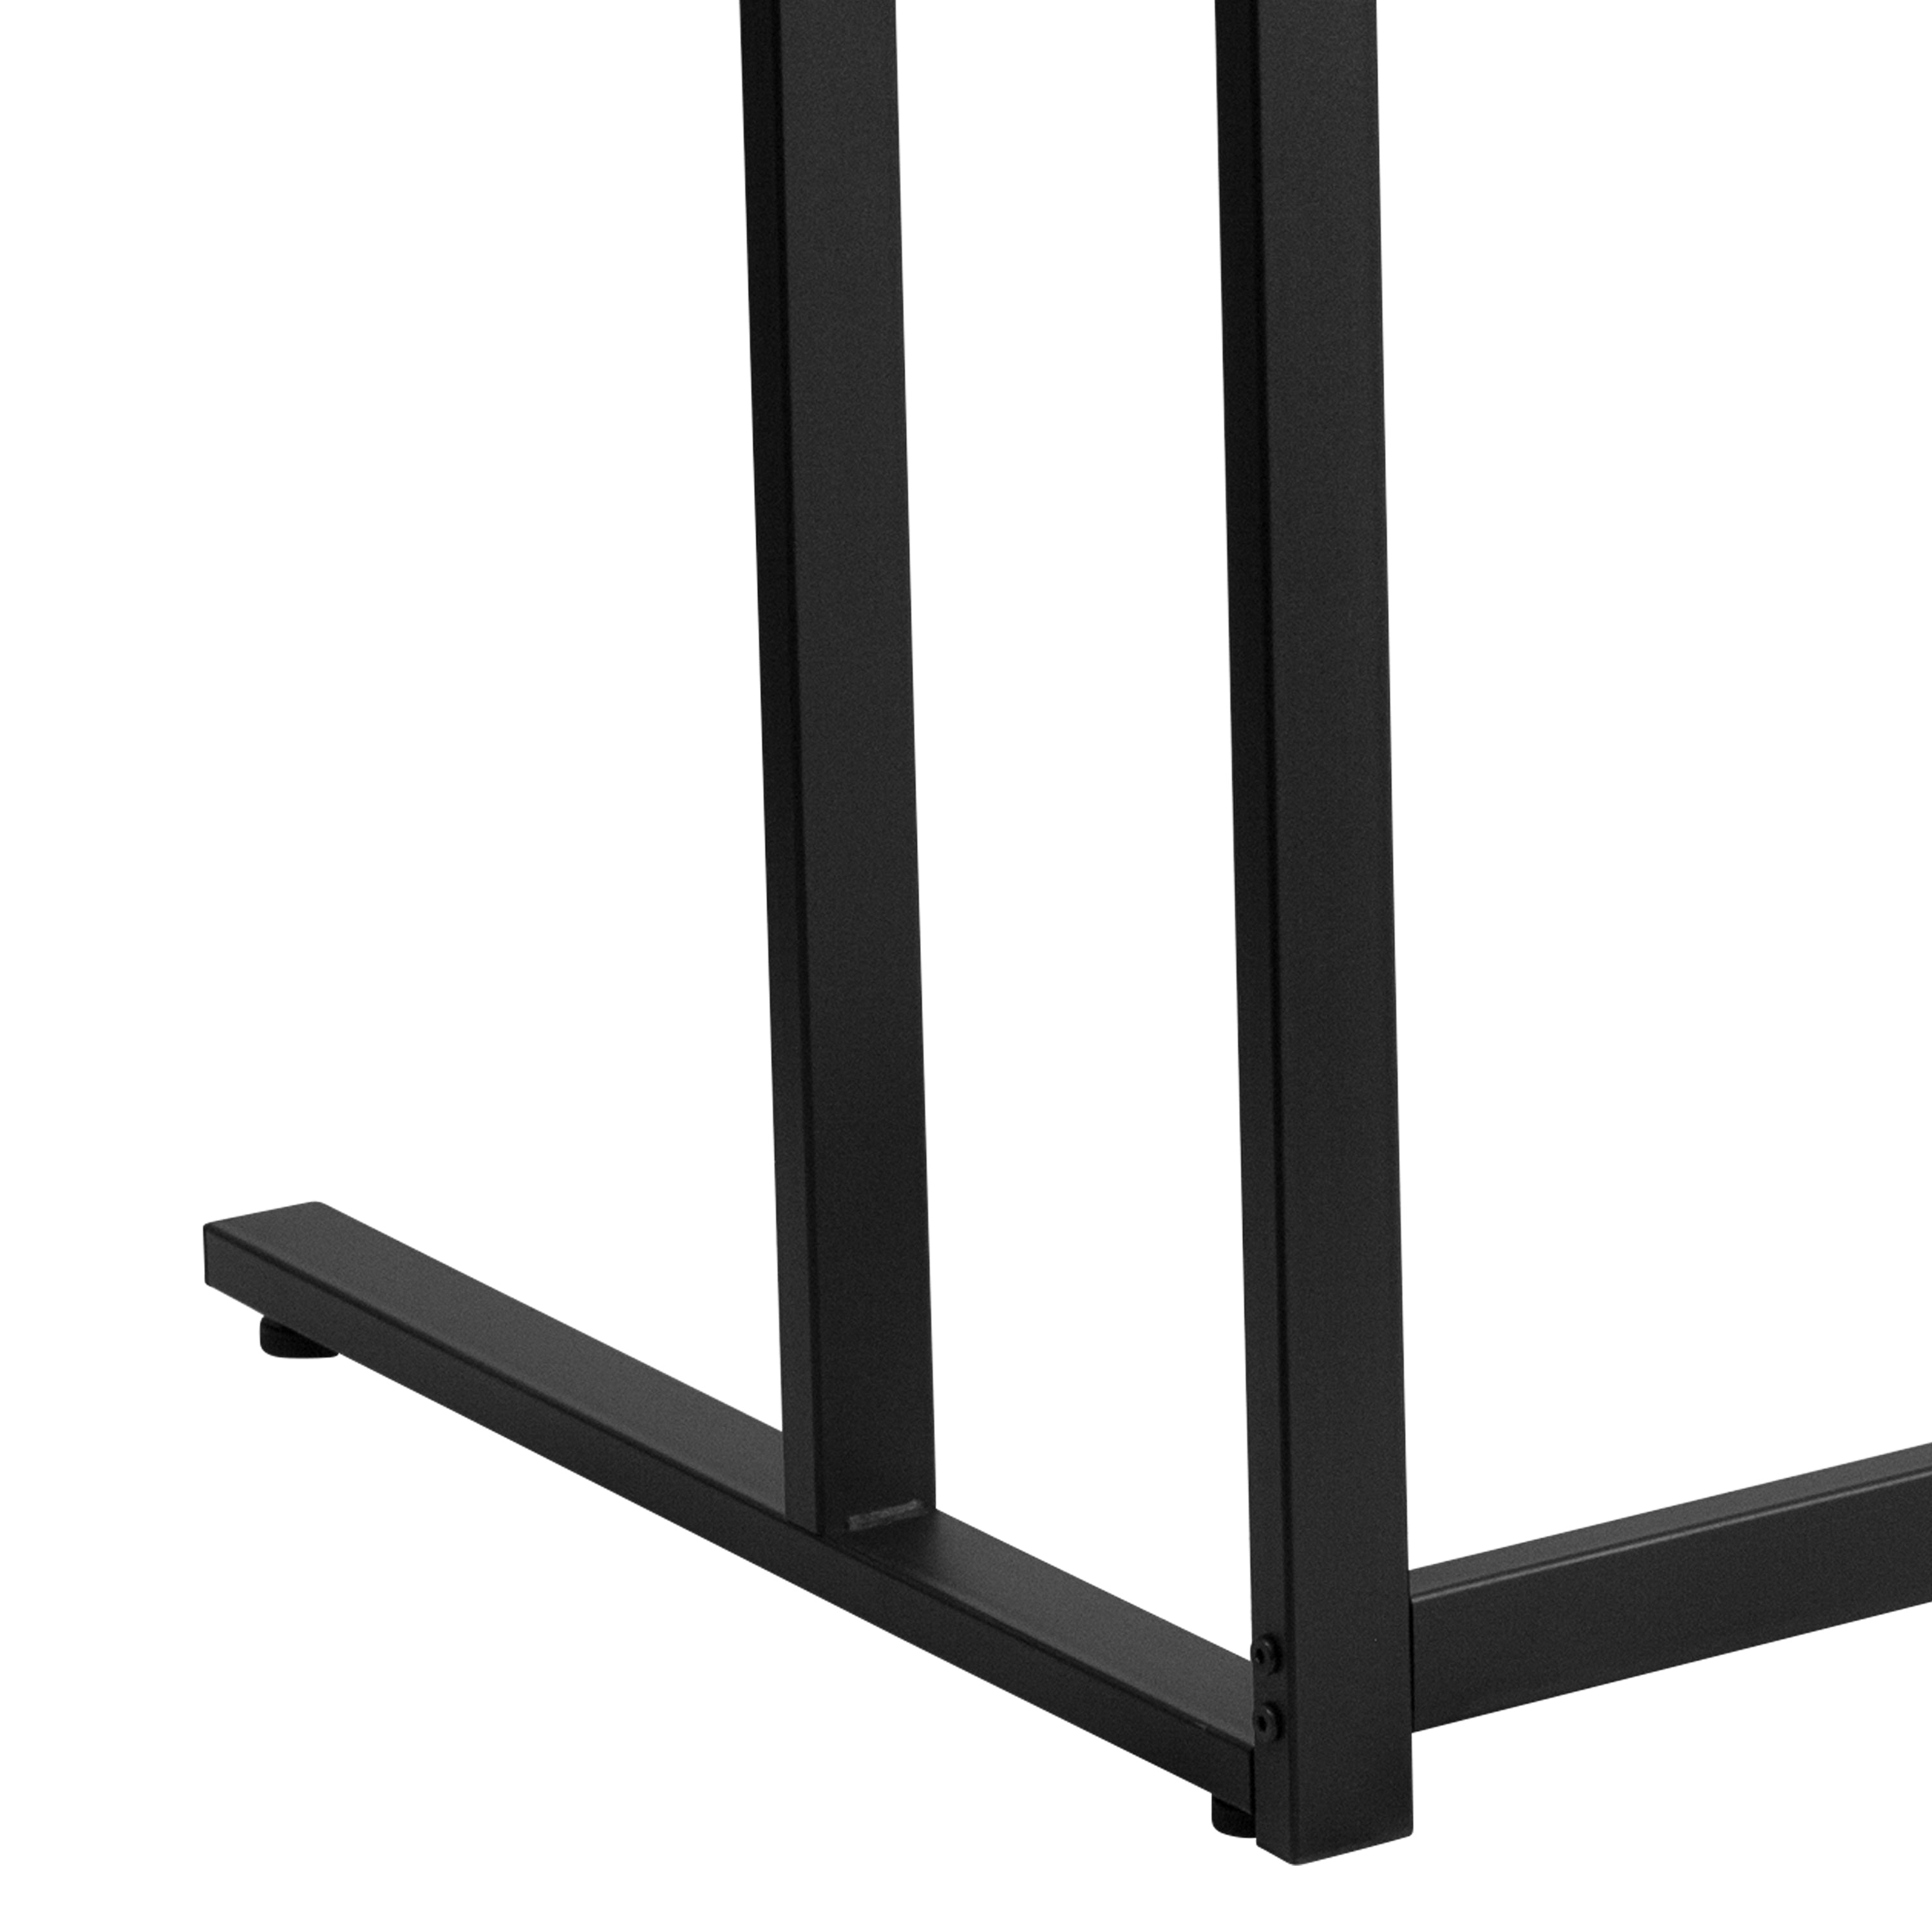 Glass Desk with Pedestal Frame-Desk-Flash Furniture-Wall2Wall Furnishings